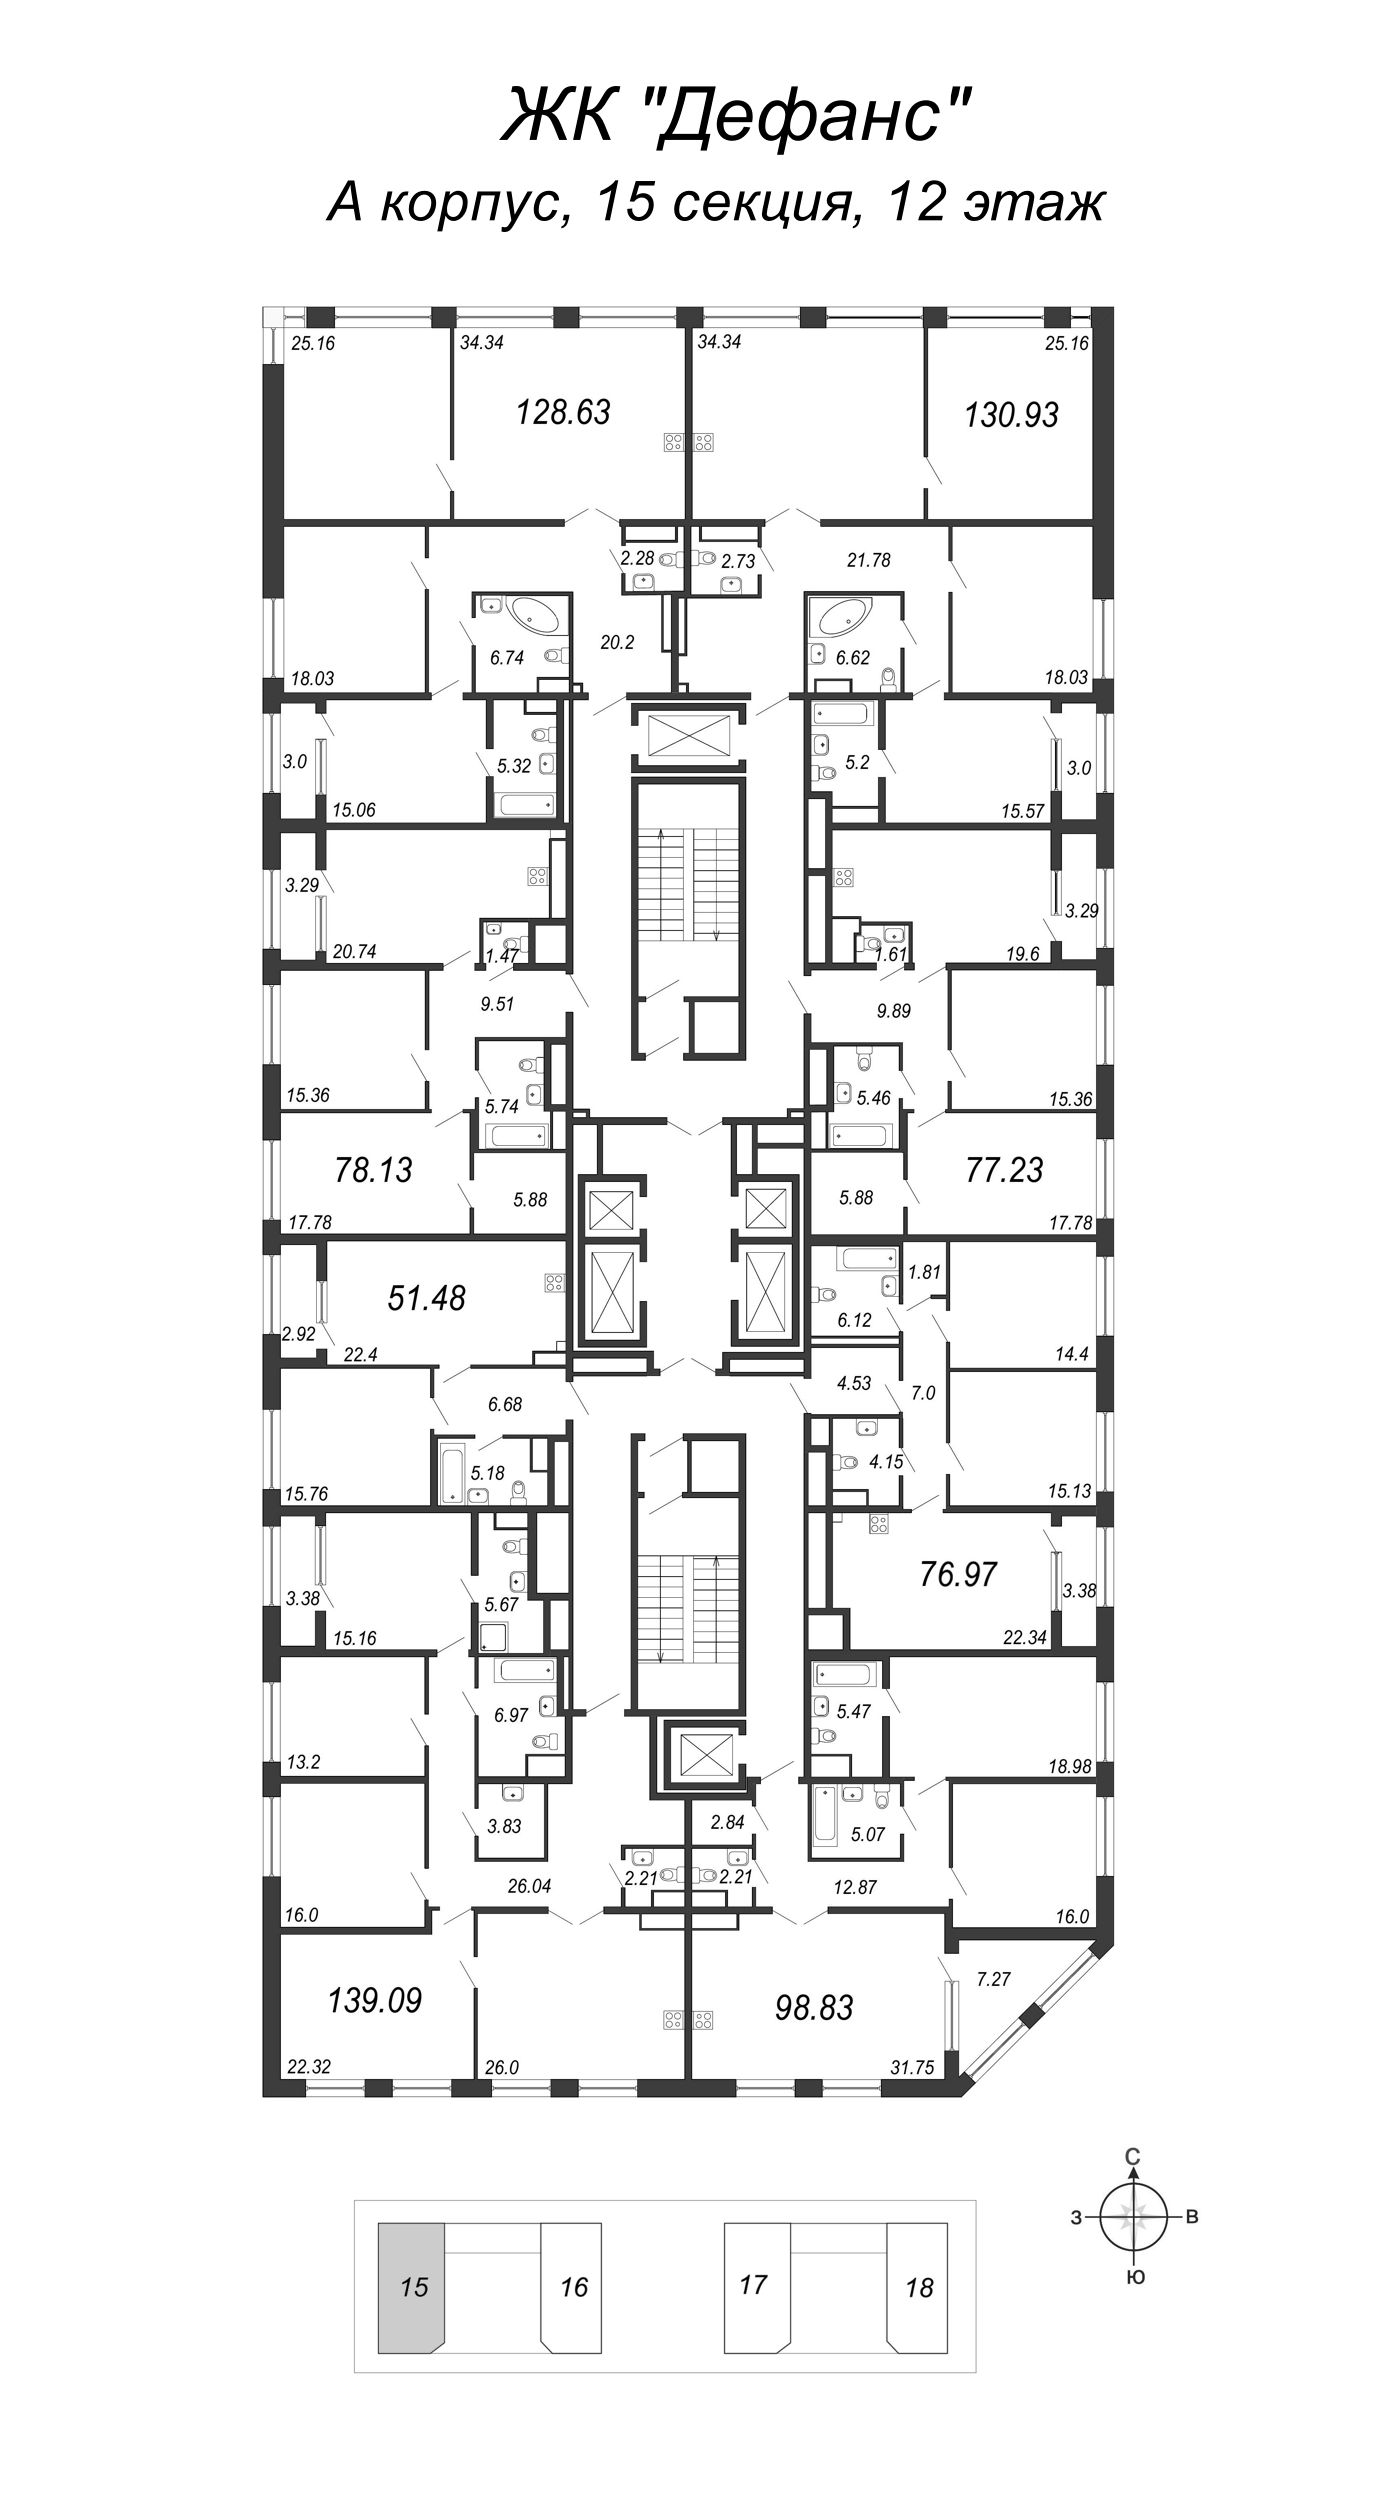 4-комнатная (Евро) квартира, 128.63 м² - планировка этажа